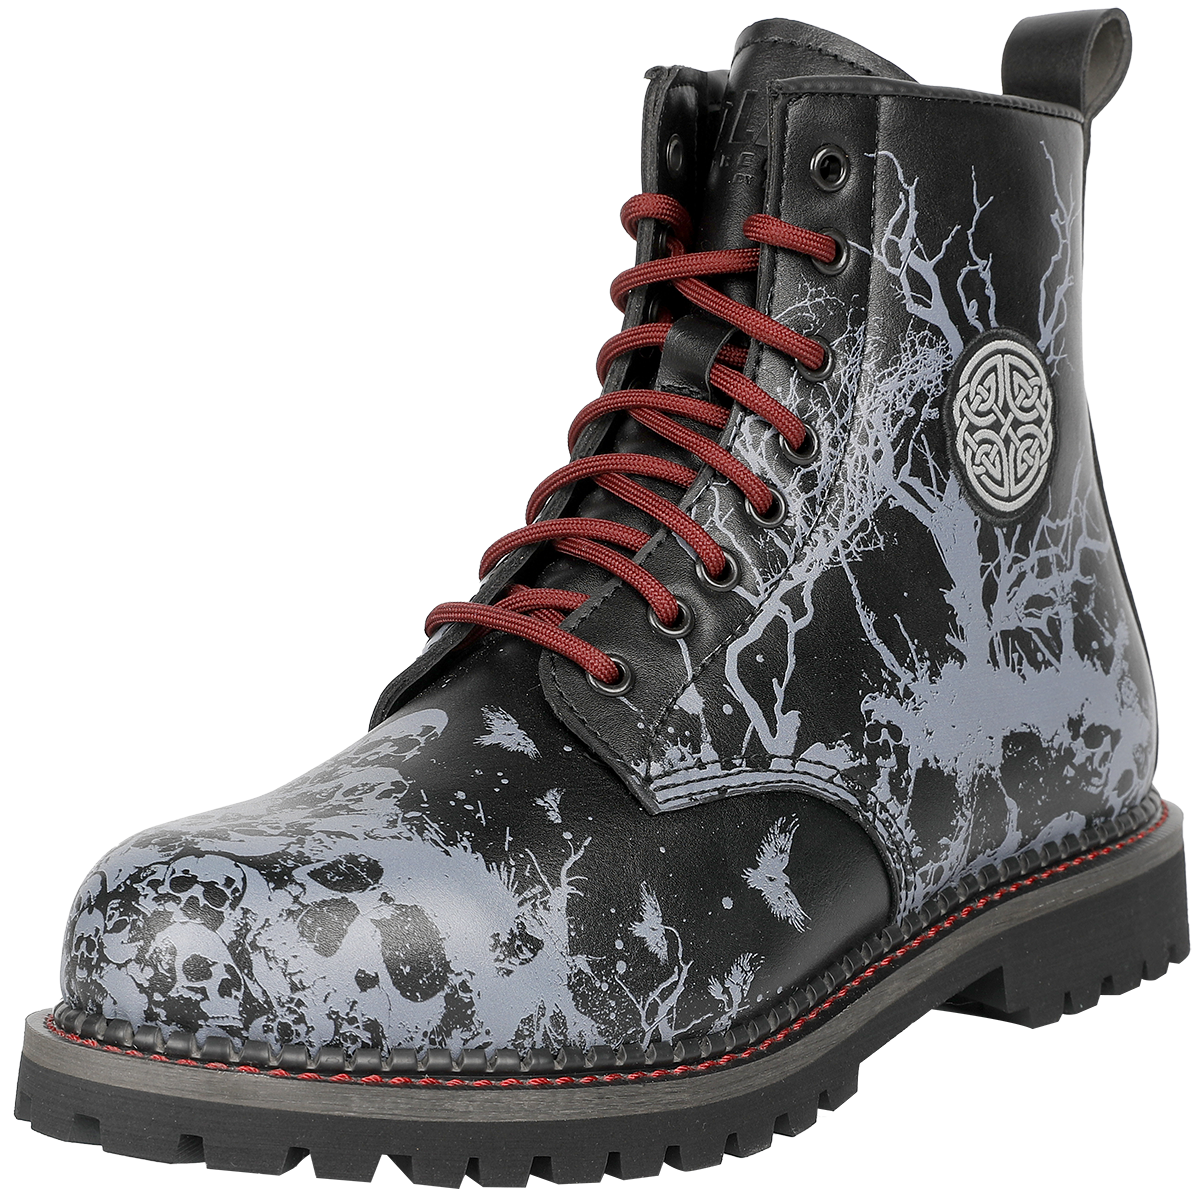 Black Premium by EMP - Boots with Skull Alloverprint and Red Details - Stiefel - schwarz| grau - EMP Exklusiv!